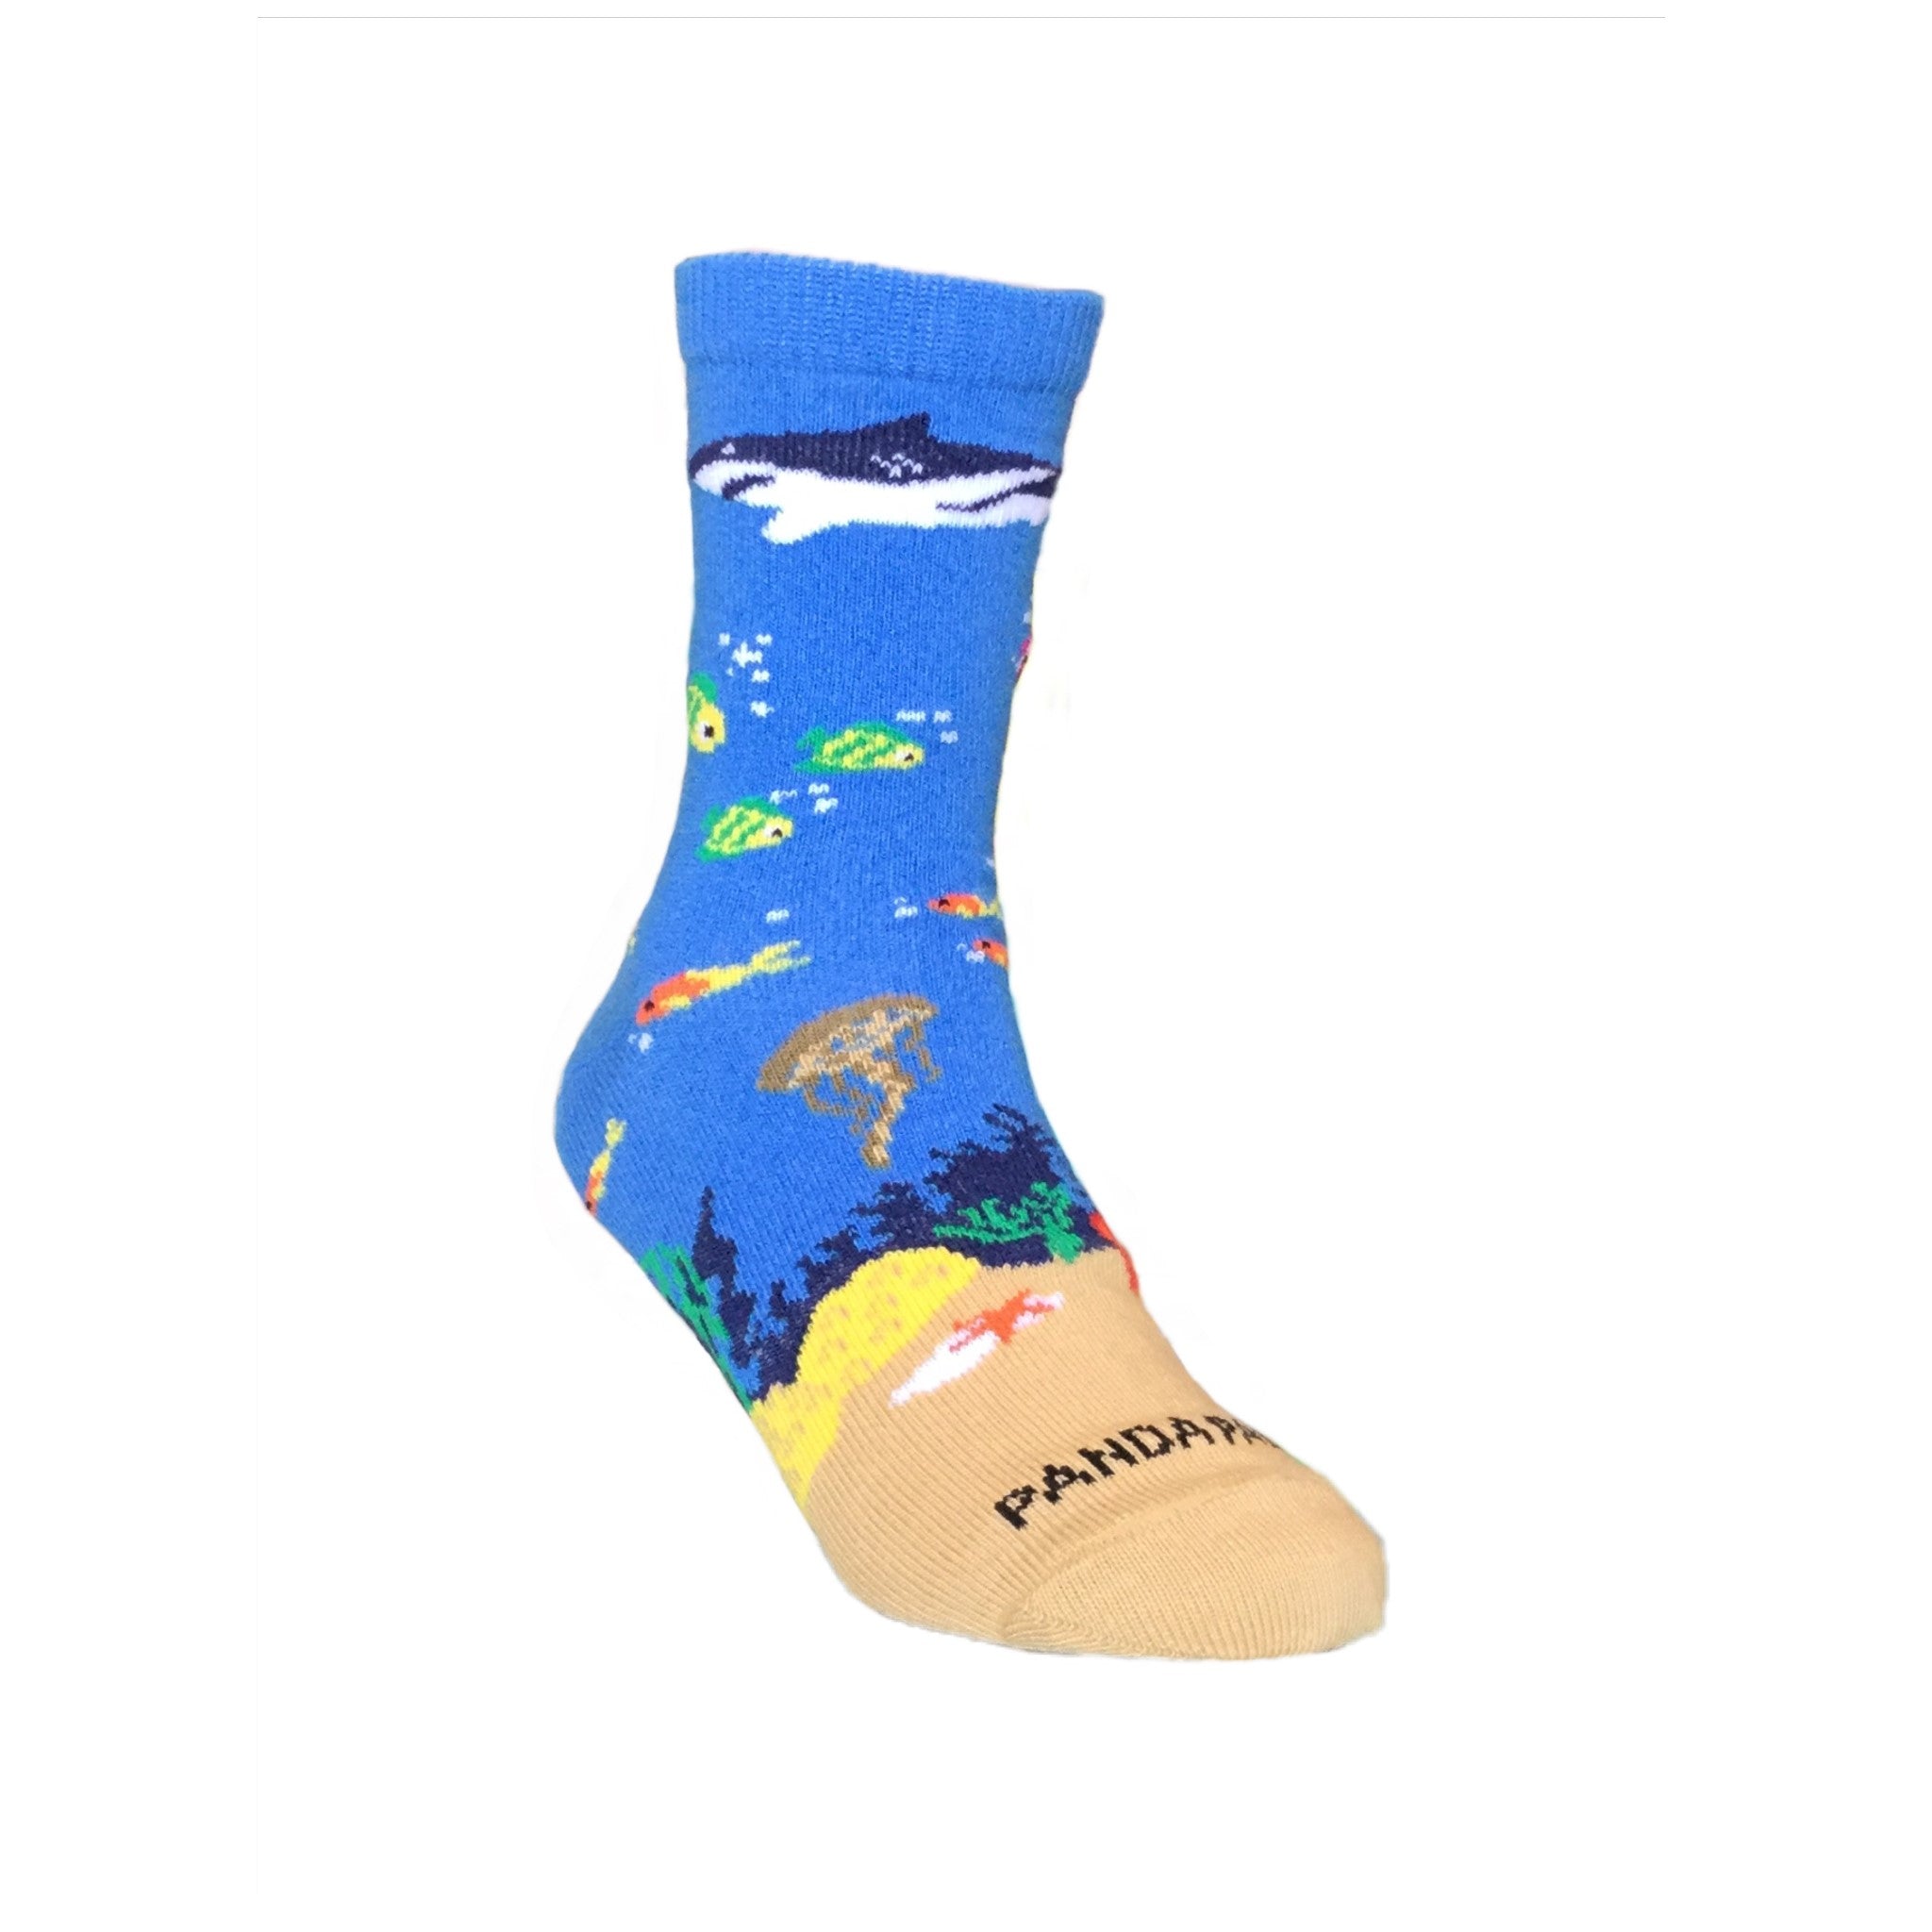 Shark in the Ocean Socks (Ages 3-7)